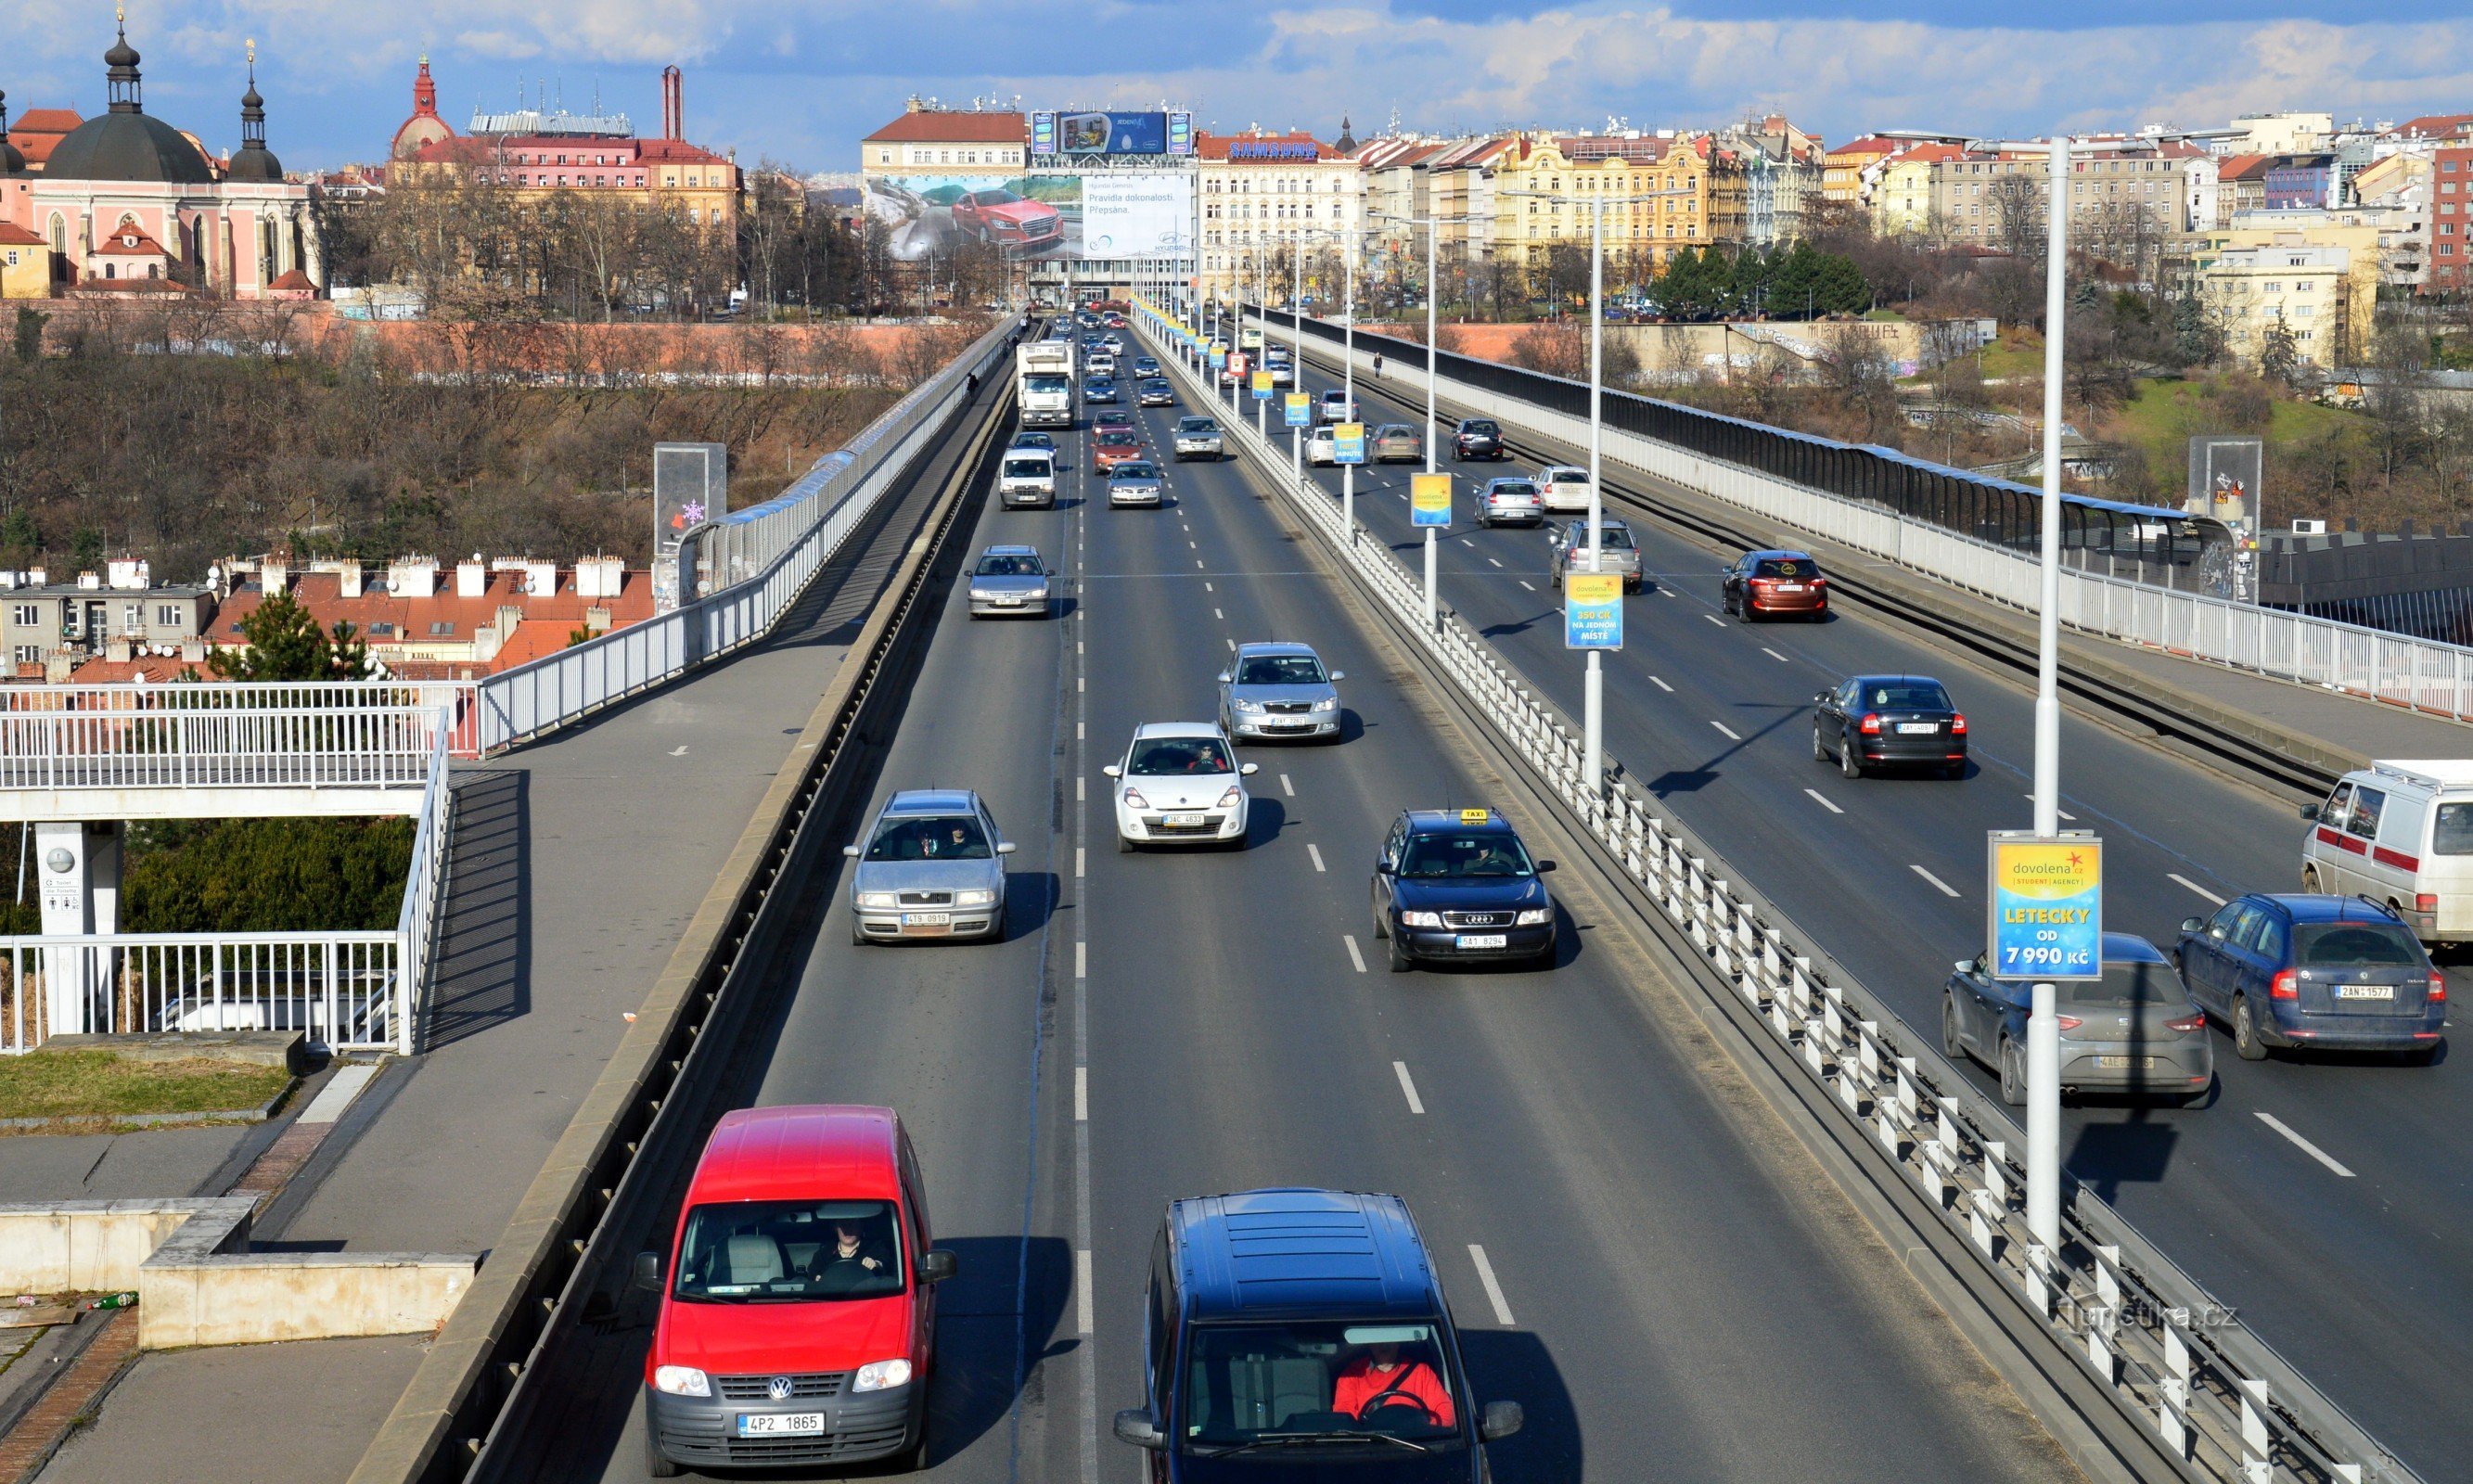 Nuselský-brug - als er weinig verkeer is